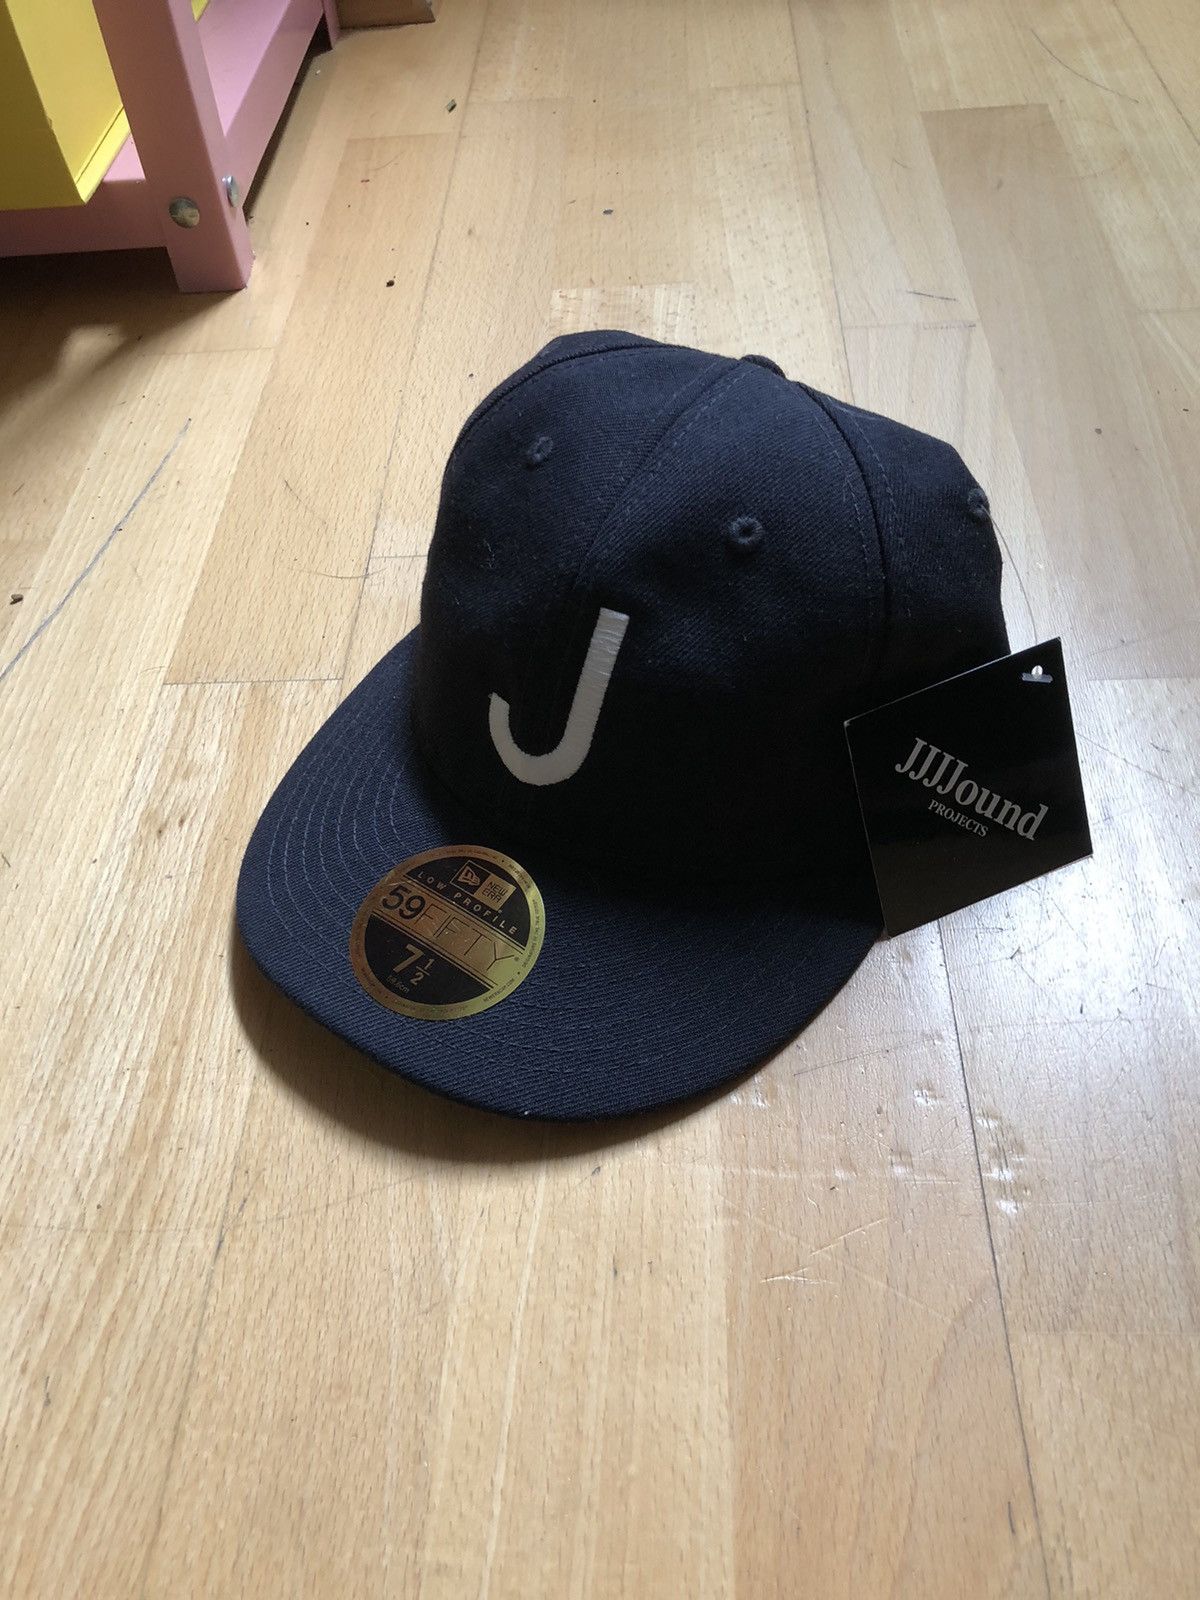 Jjjjound JJJJound x New Era Low Profile J Fitted Cap - 7 1/2 | Grailed